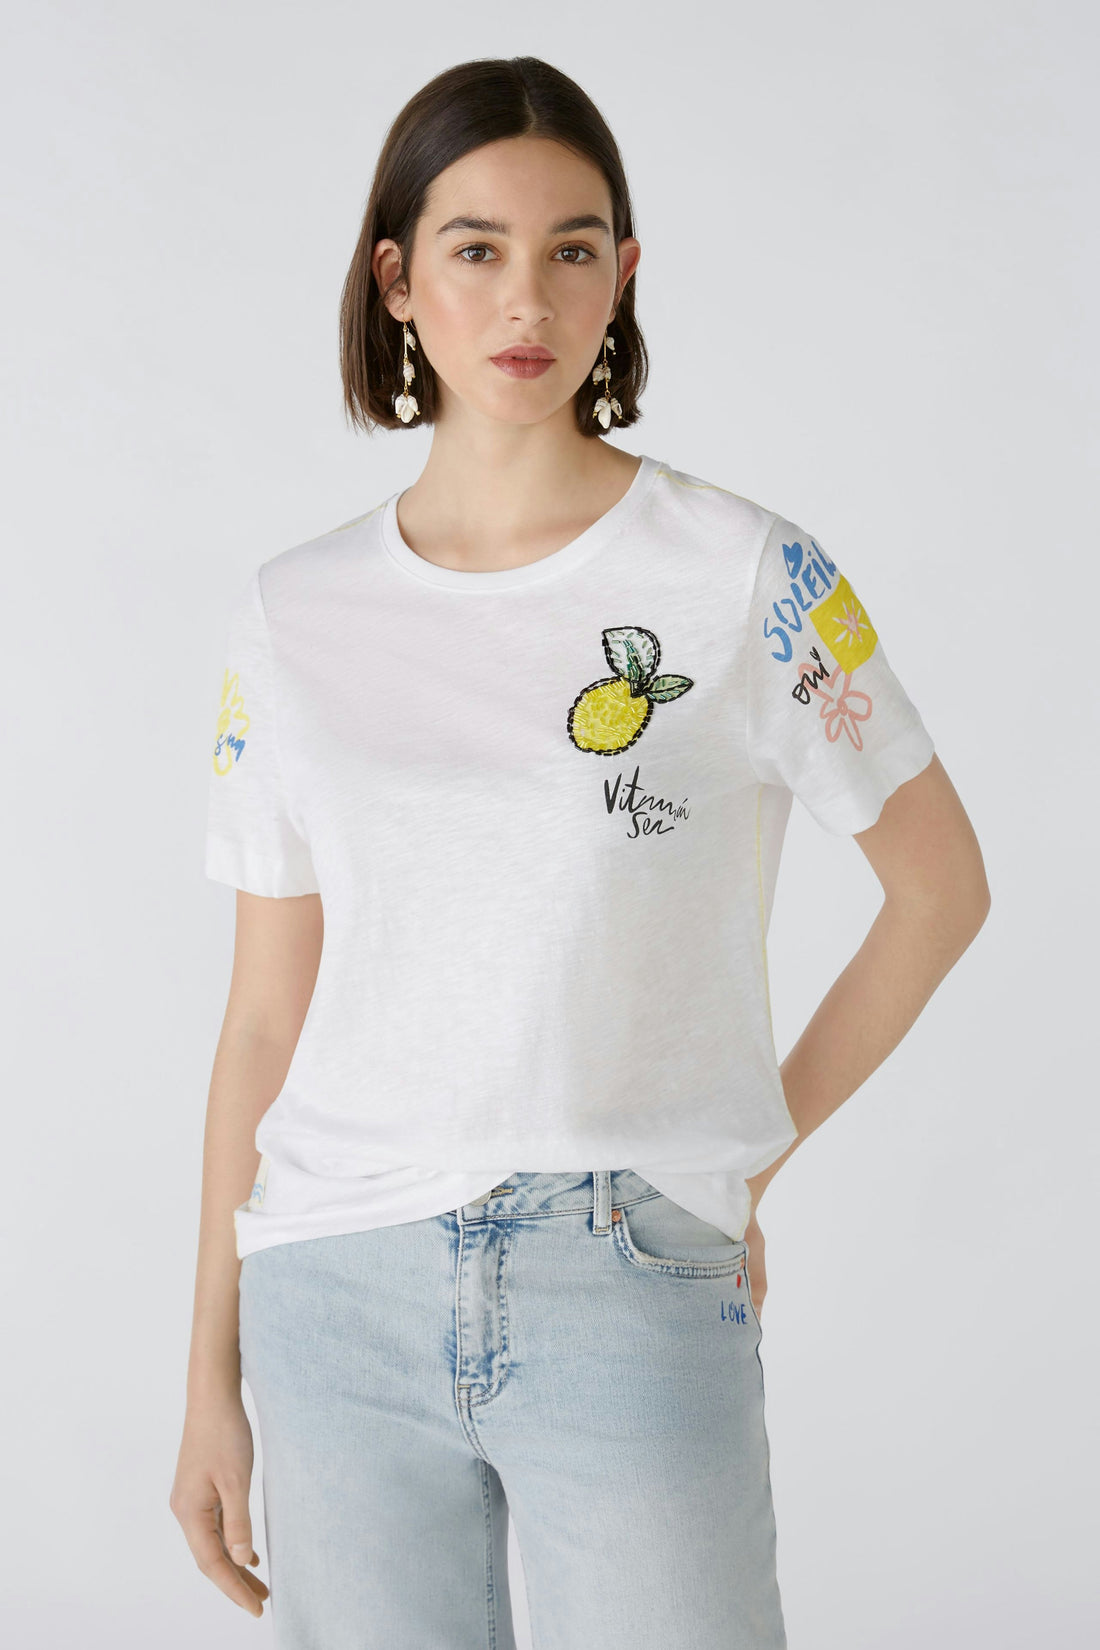 T-Shirt 100% Cotton_87386_1002_01